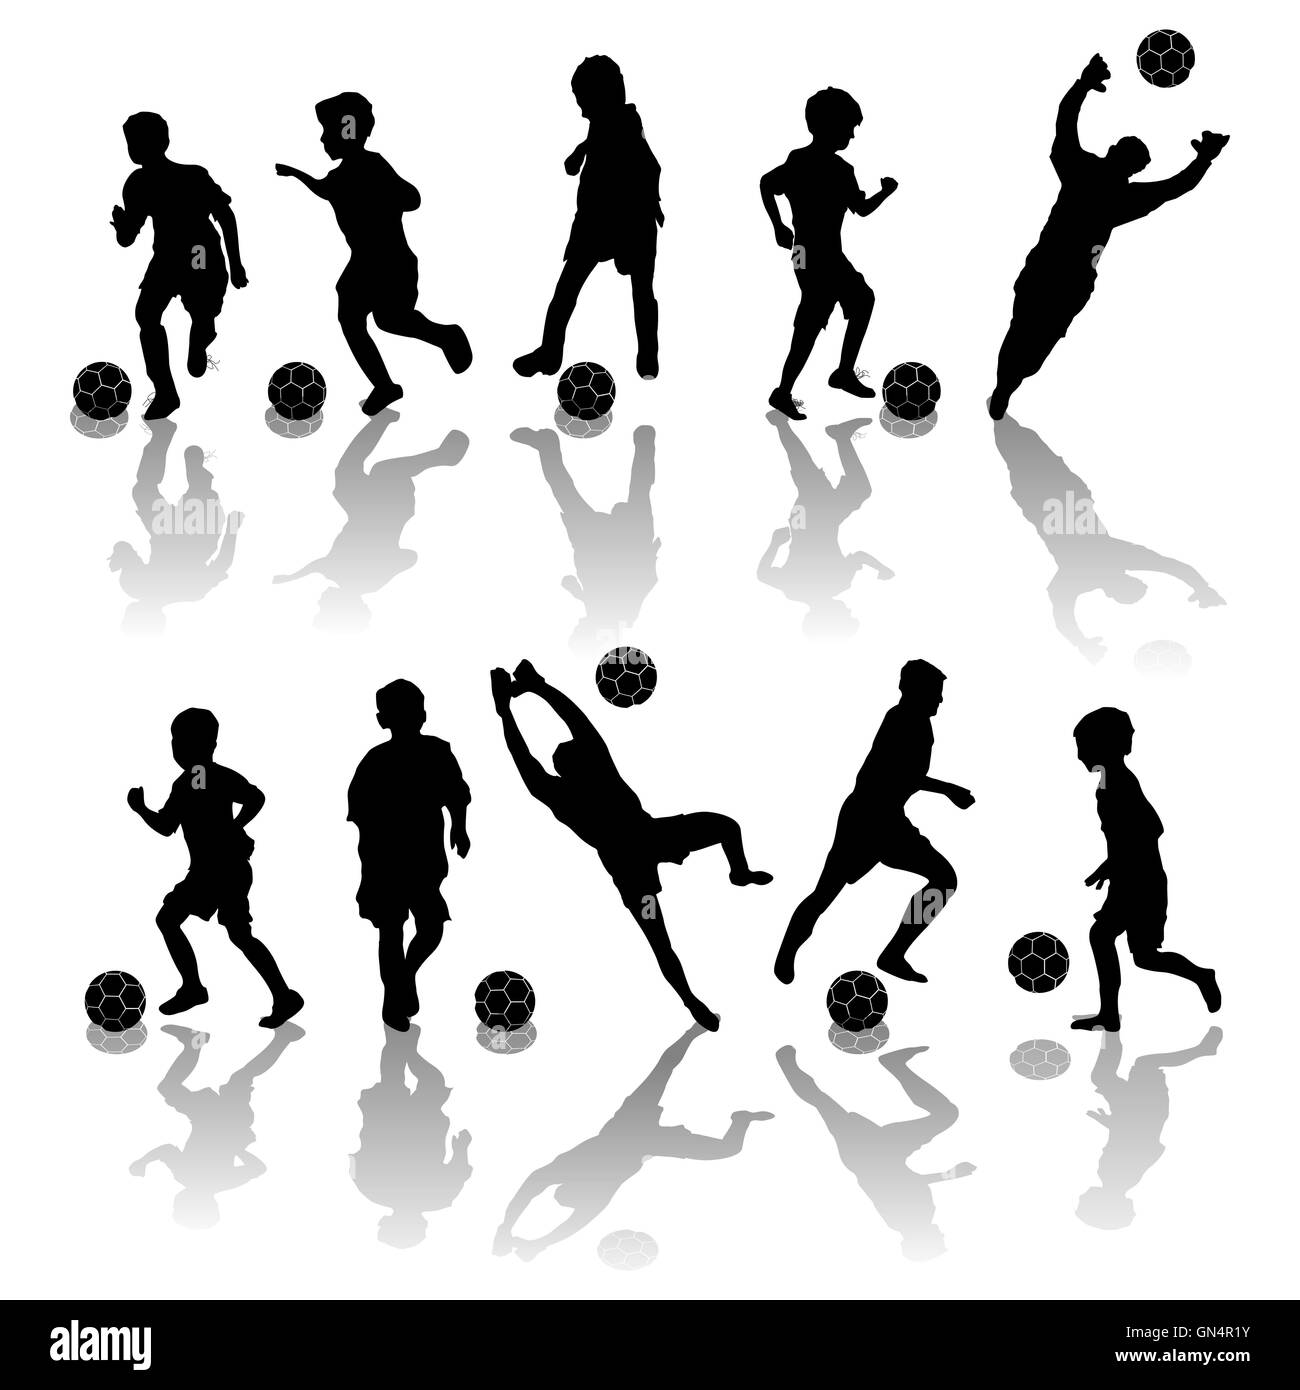 Soccer, footbal players Stock Photo